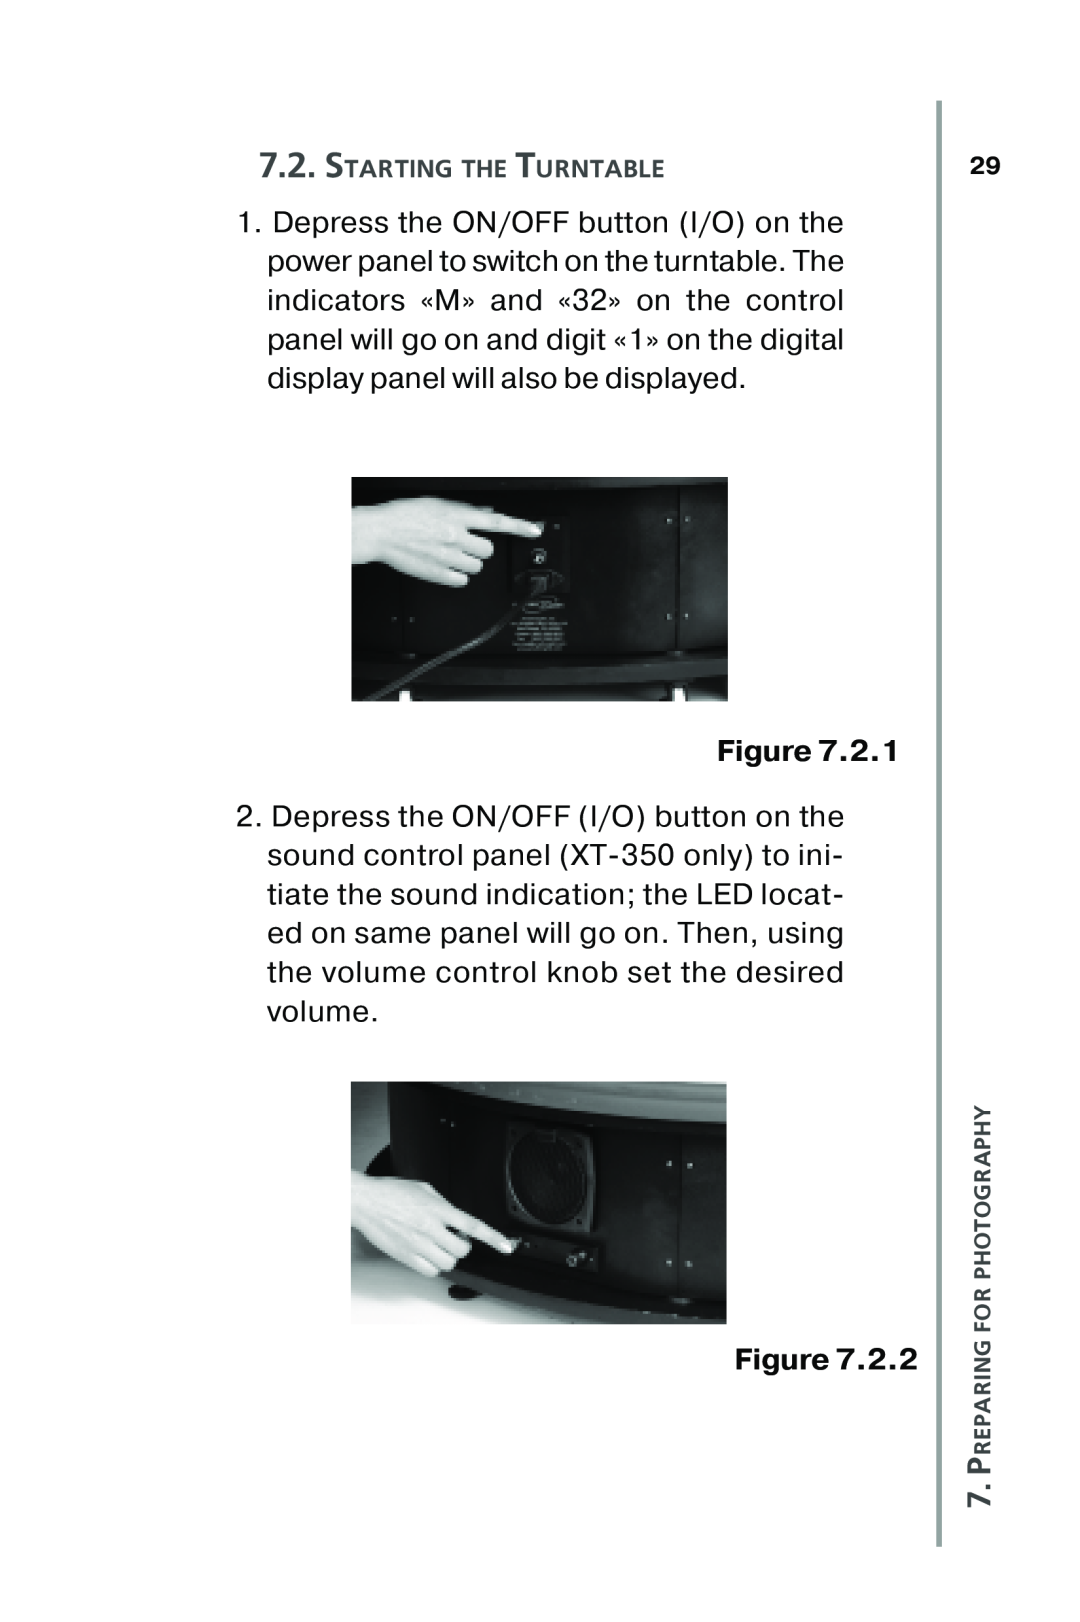 Nikon XT100, XT350 manual Starting The Turntable 